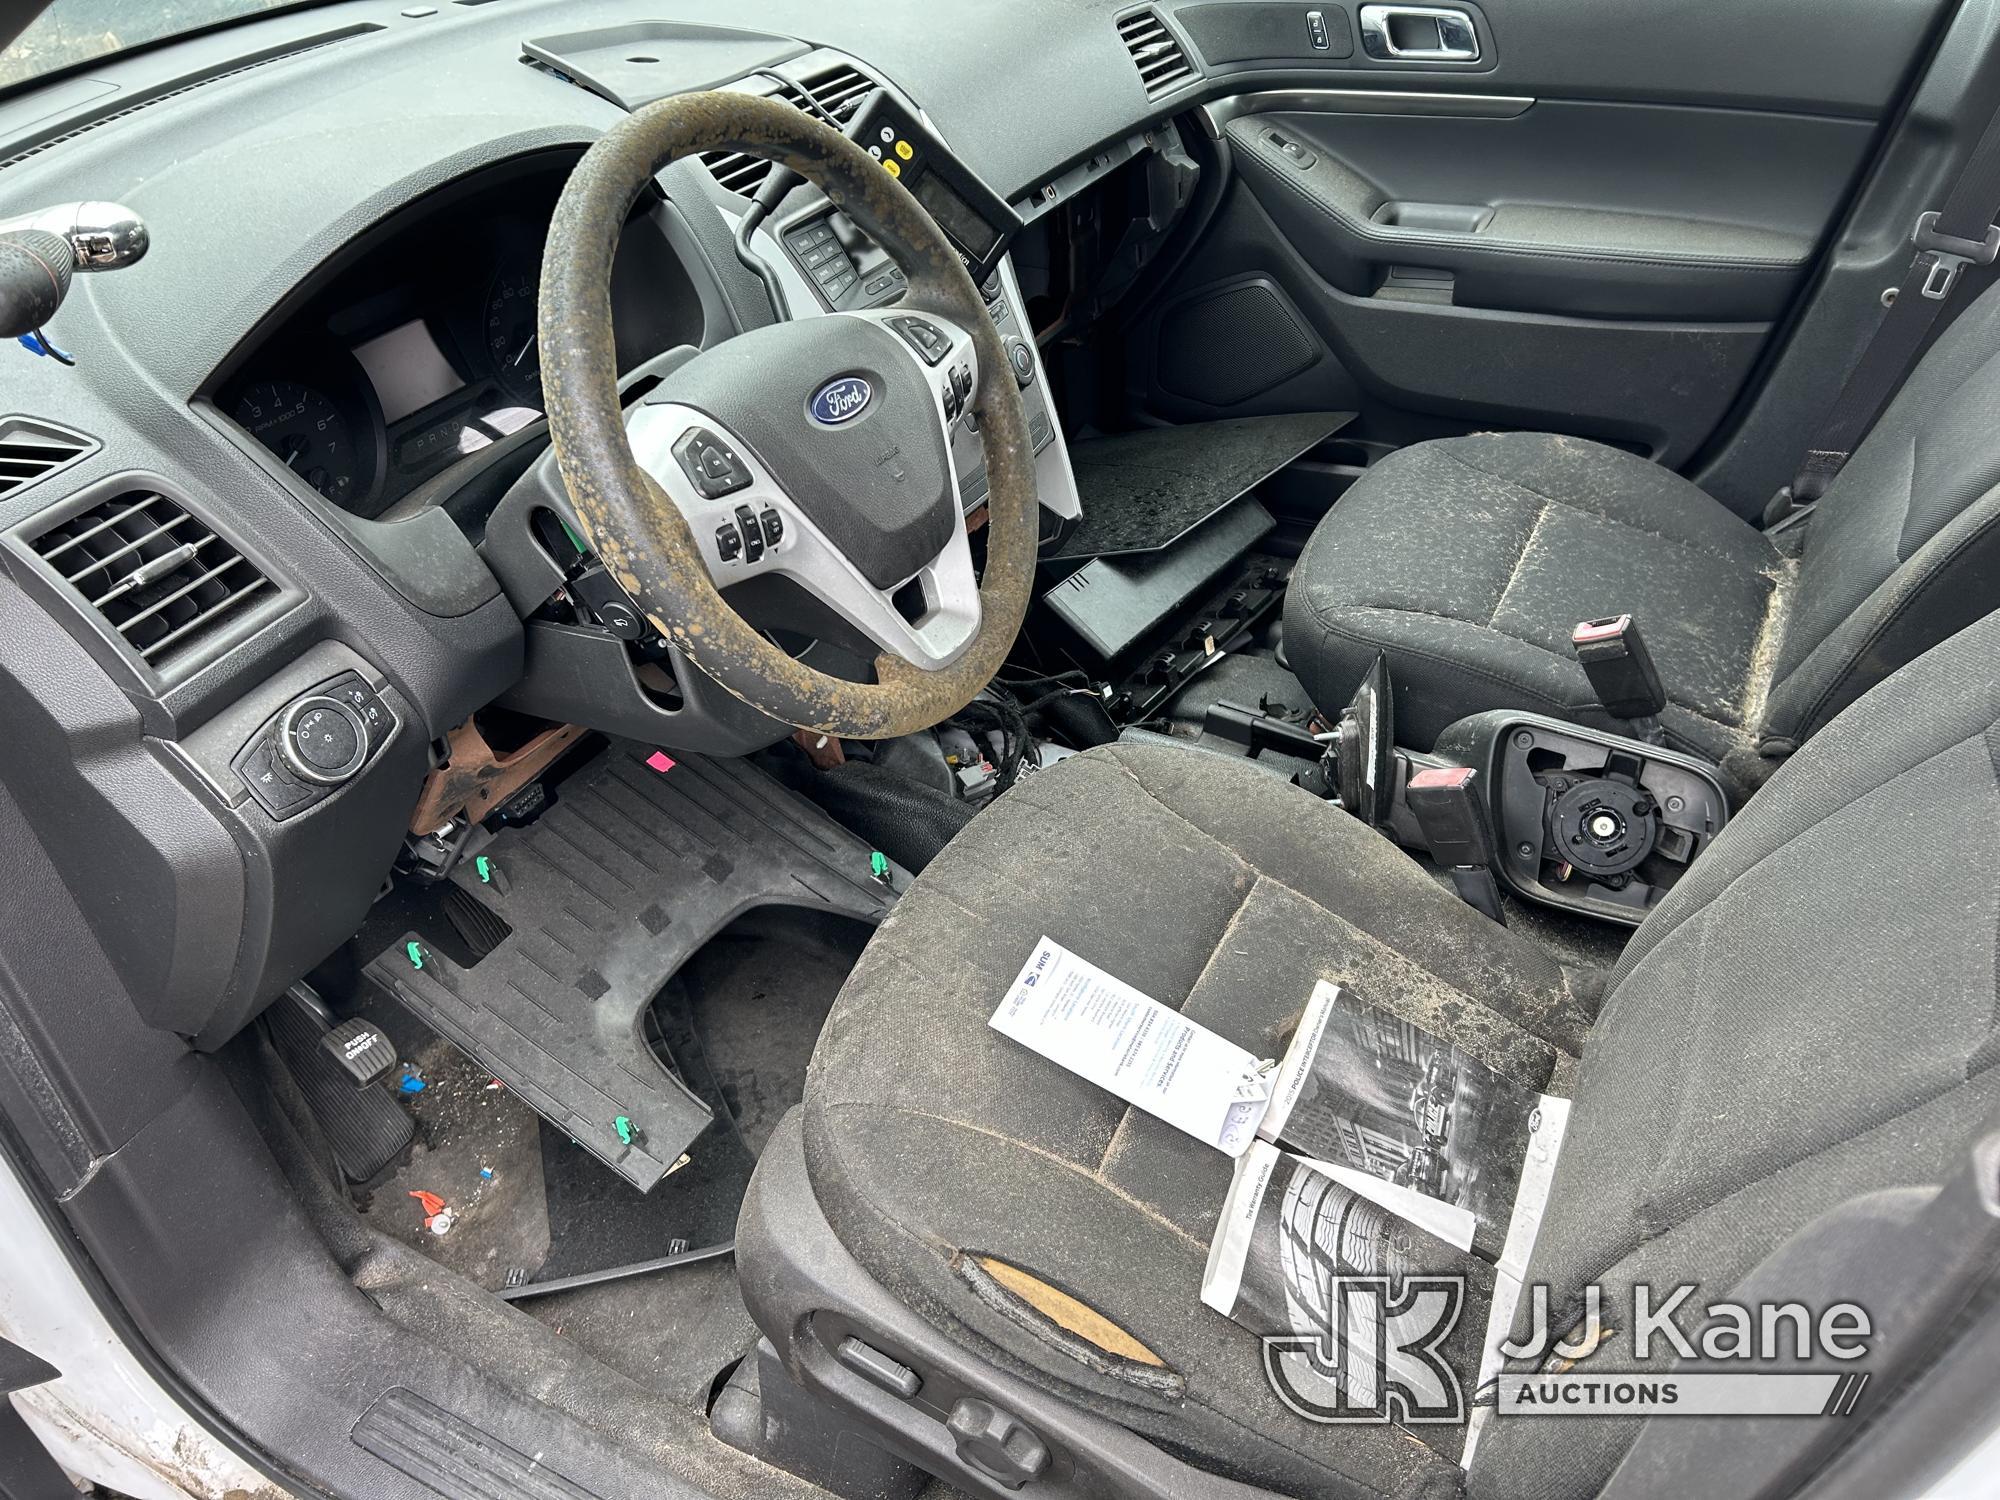 (Covington, LA) 2015 Ford Explorer AWD Police Interceptor 4-Door Sport Utility Vehicle Not Running,